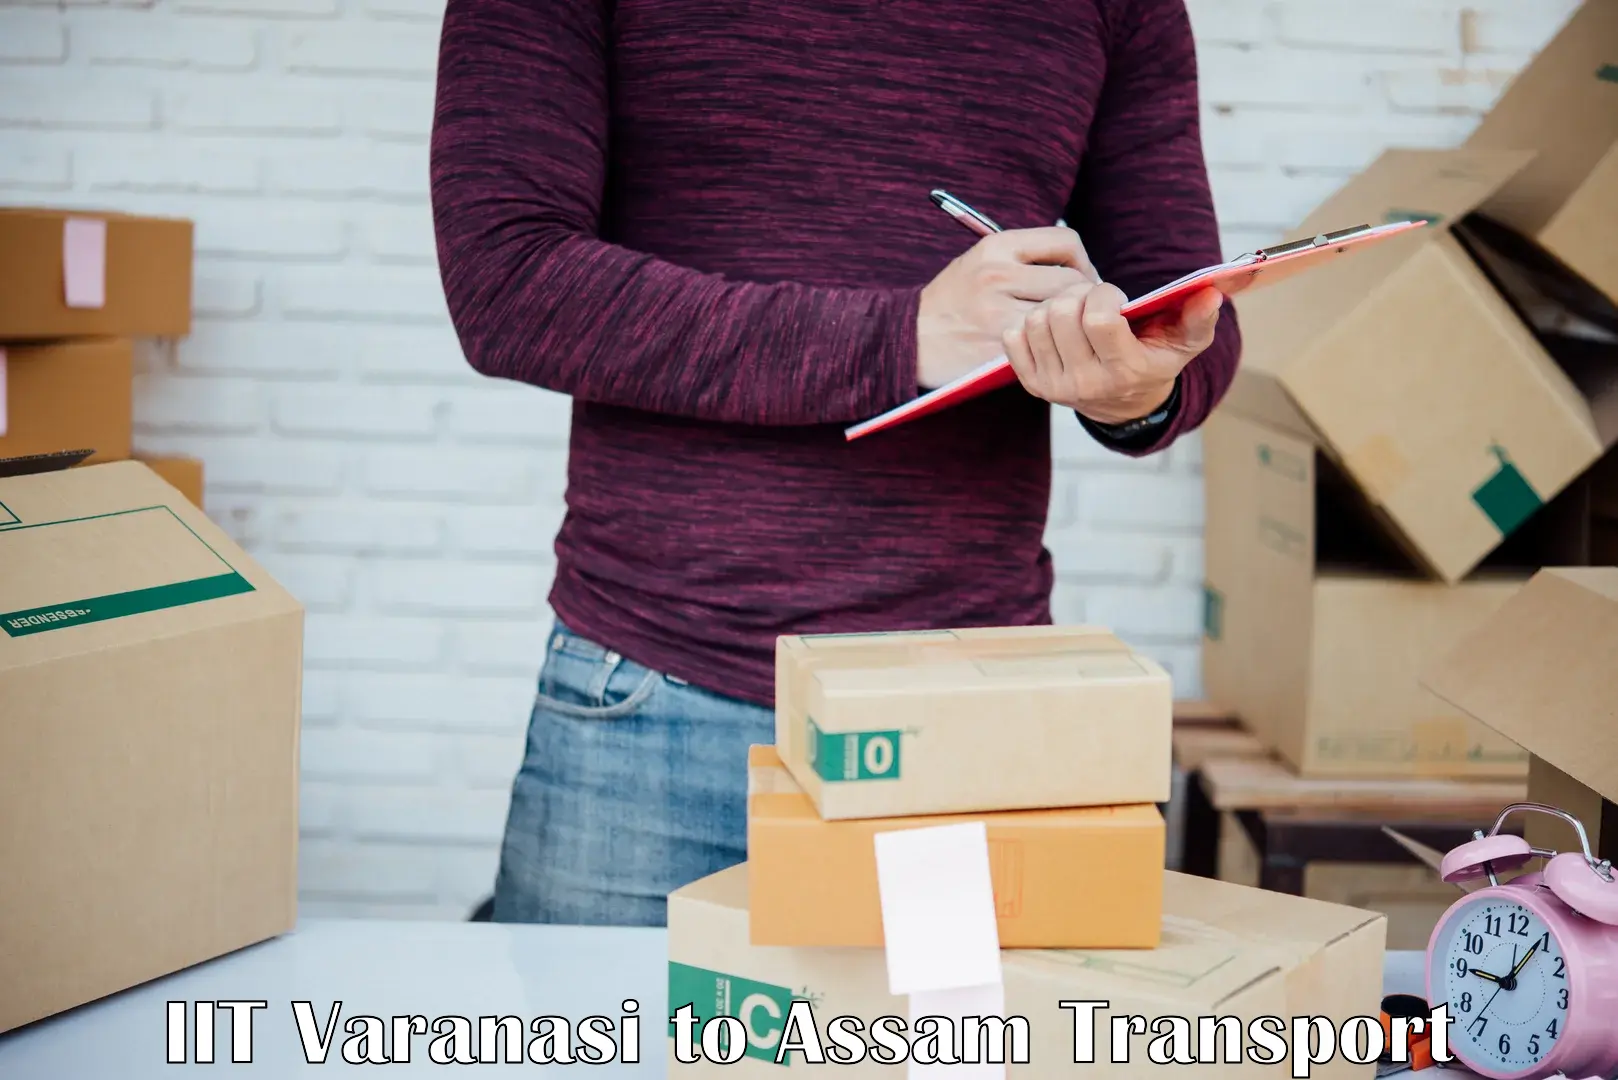 Goods delivery service IIT Varanasi to Guwahati